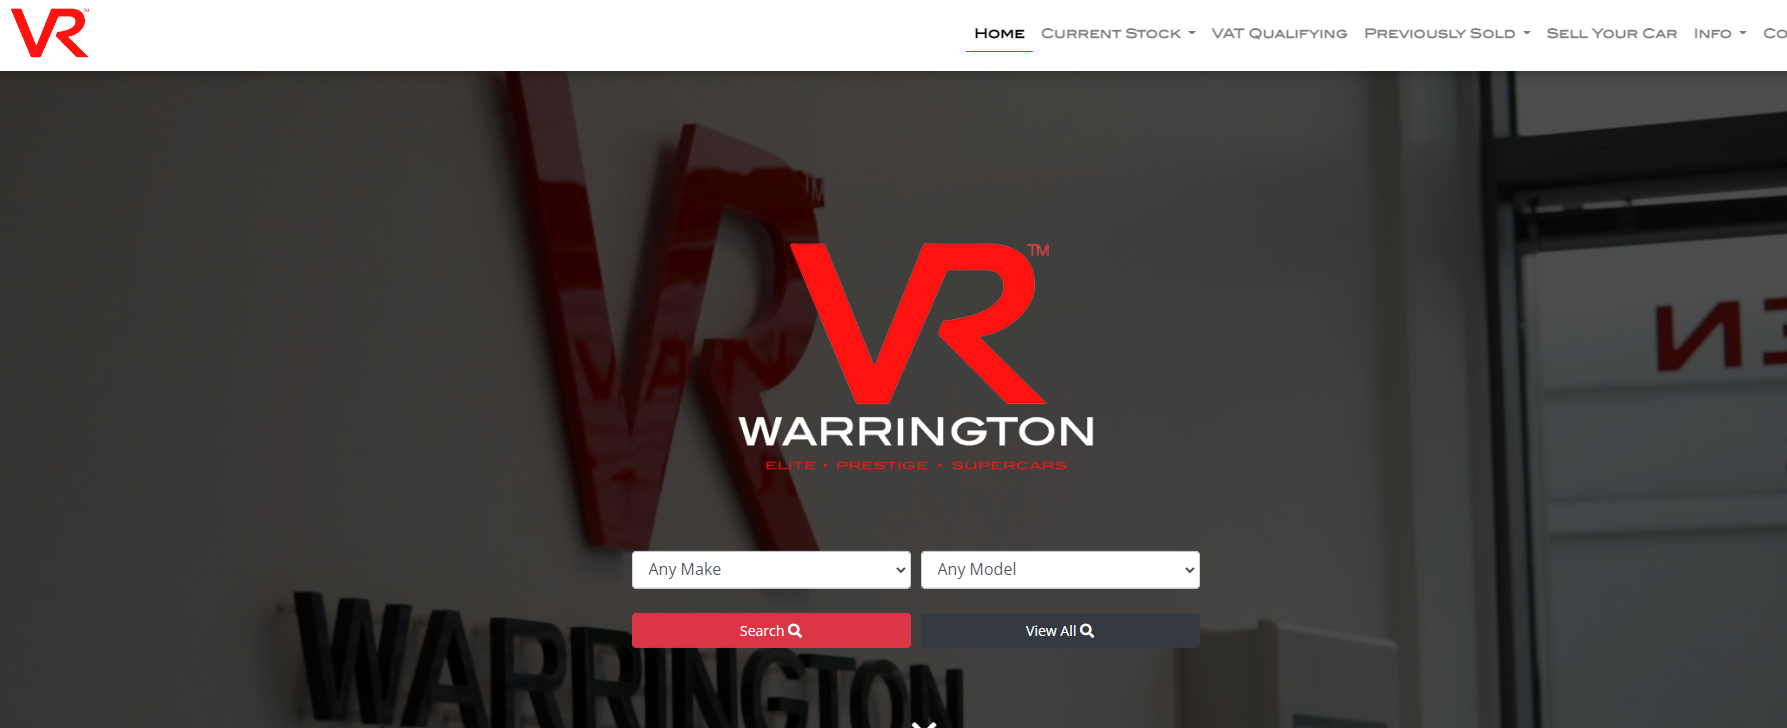 VR EPS WARRINGTON  Review